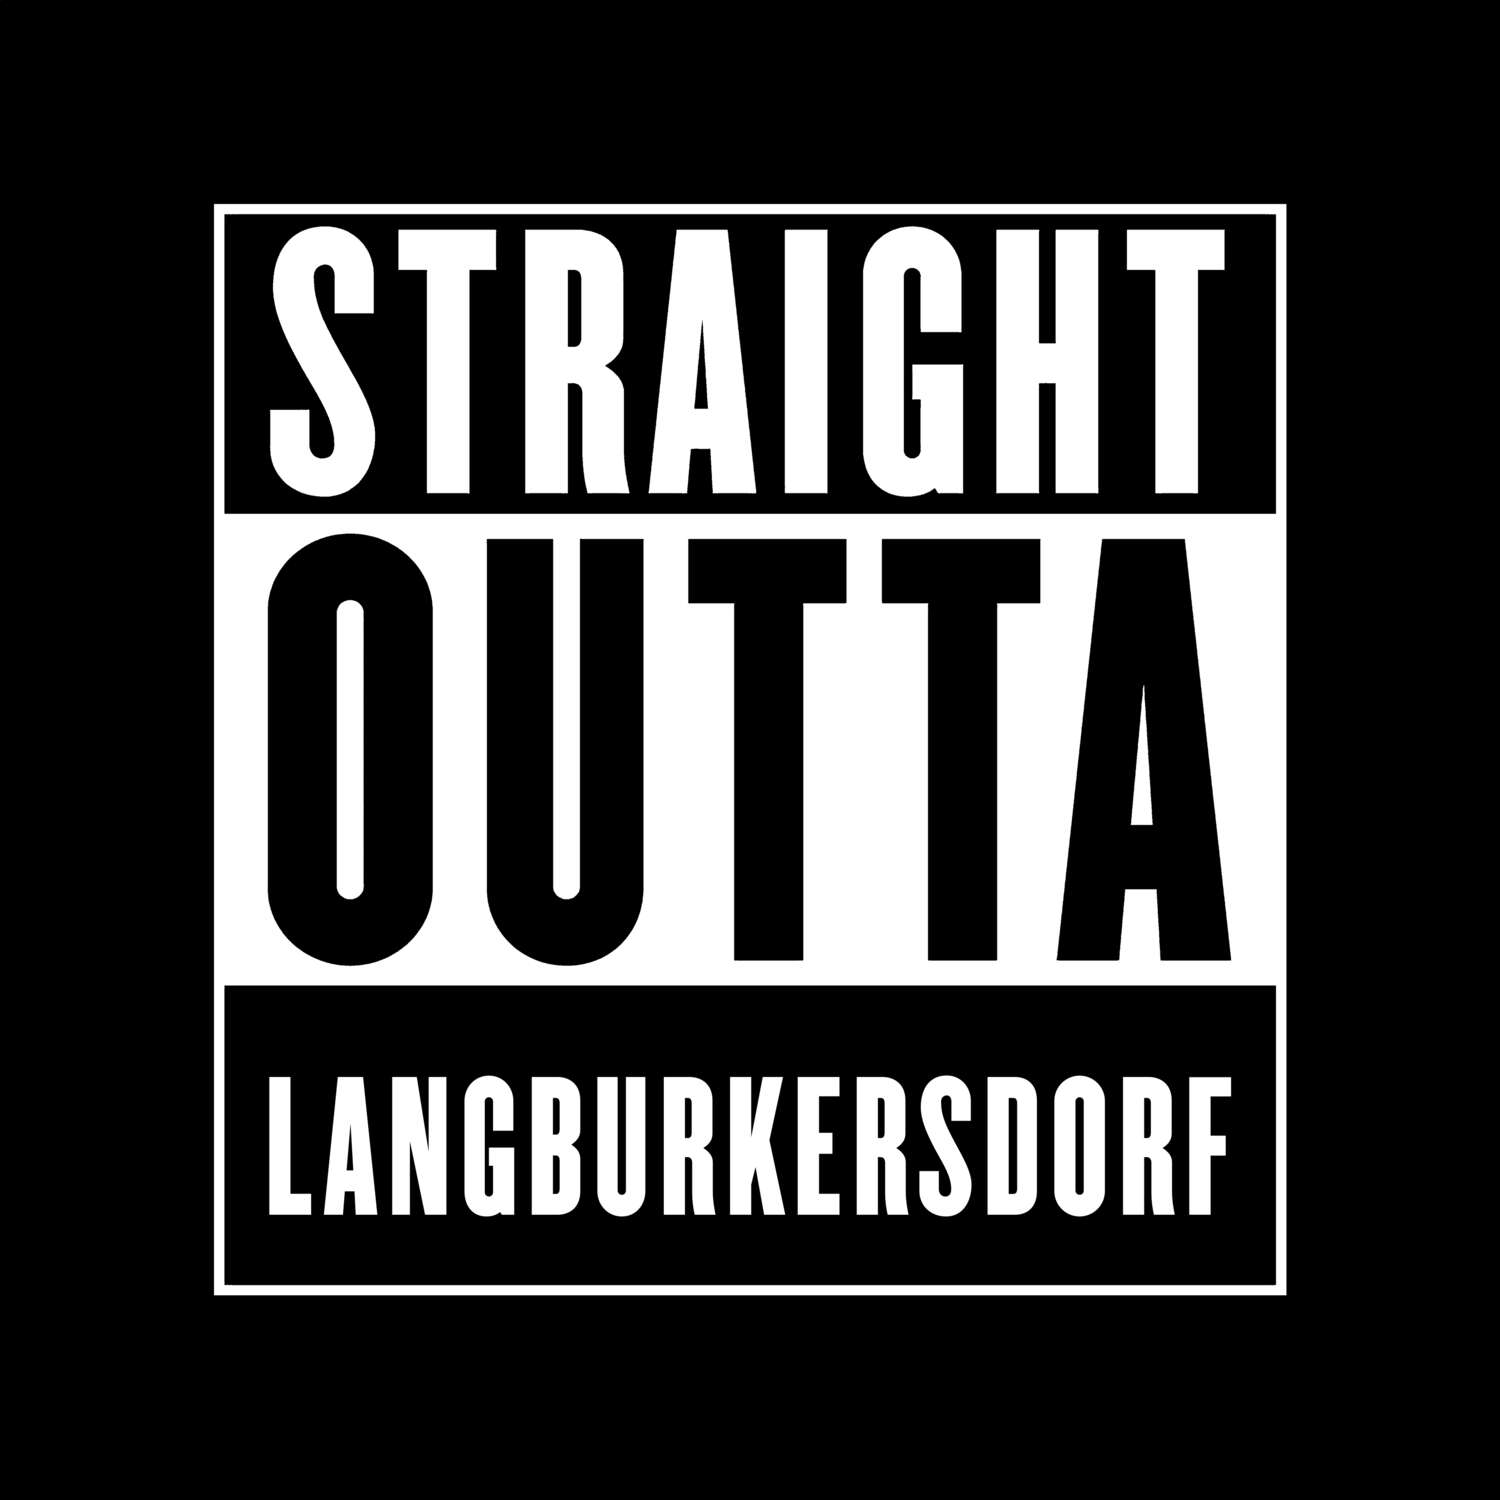 Langburkersdorf T-Shirt »Straight Outta«